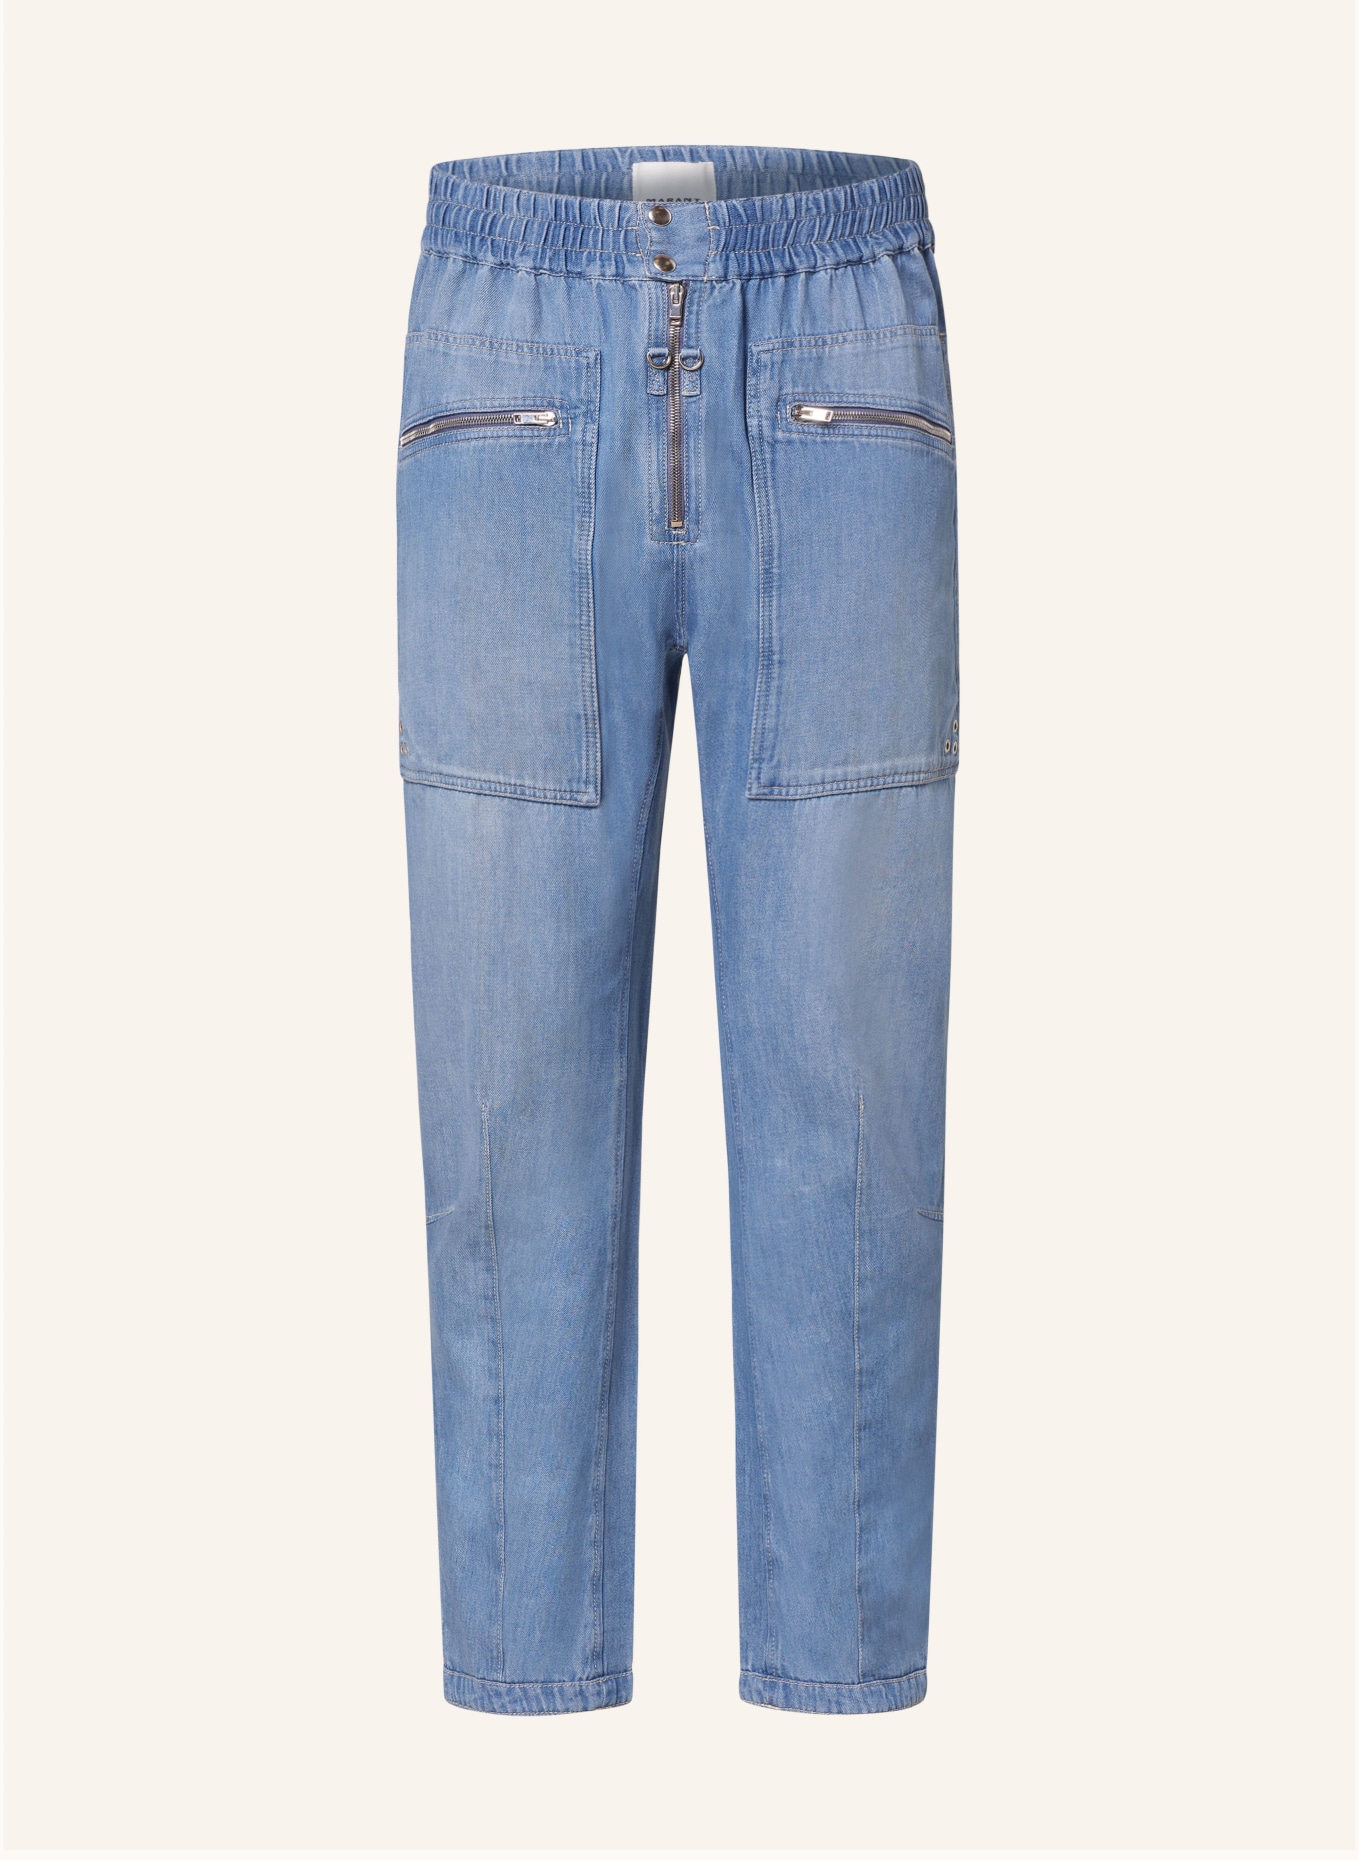 ISABEL MARANT Jeans JELSON Regular Fit, Farbe: 30BU blue (Bild 1)